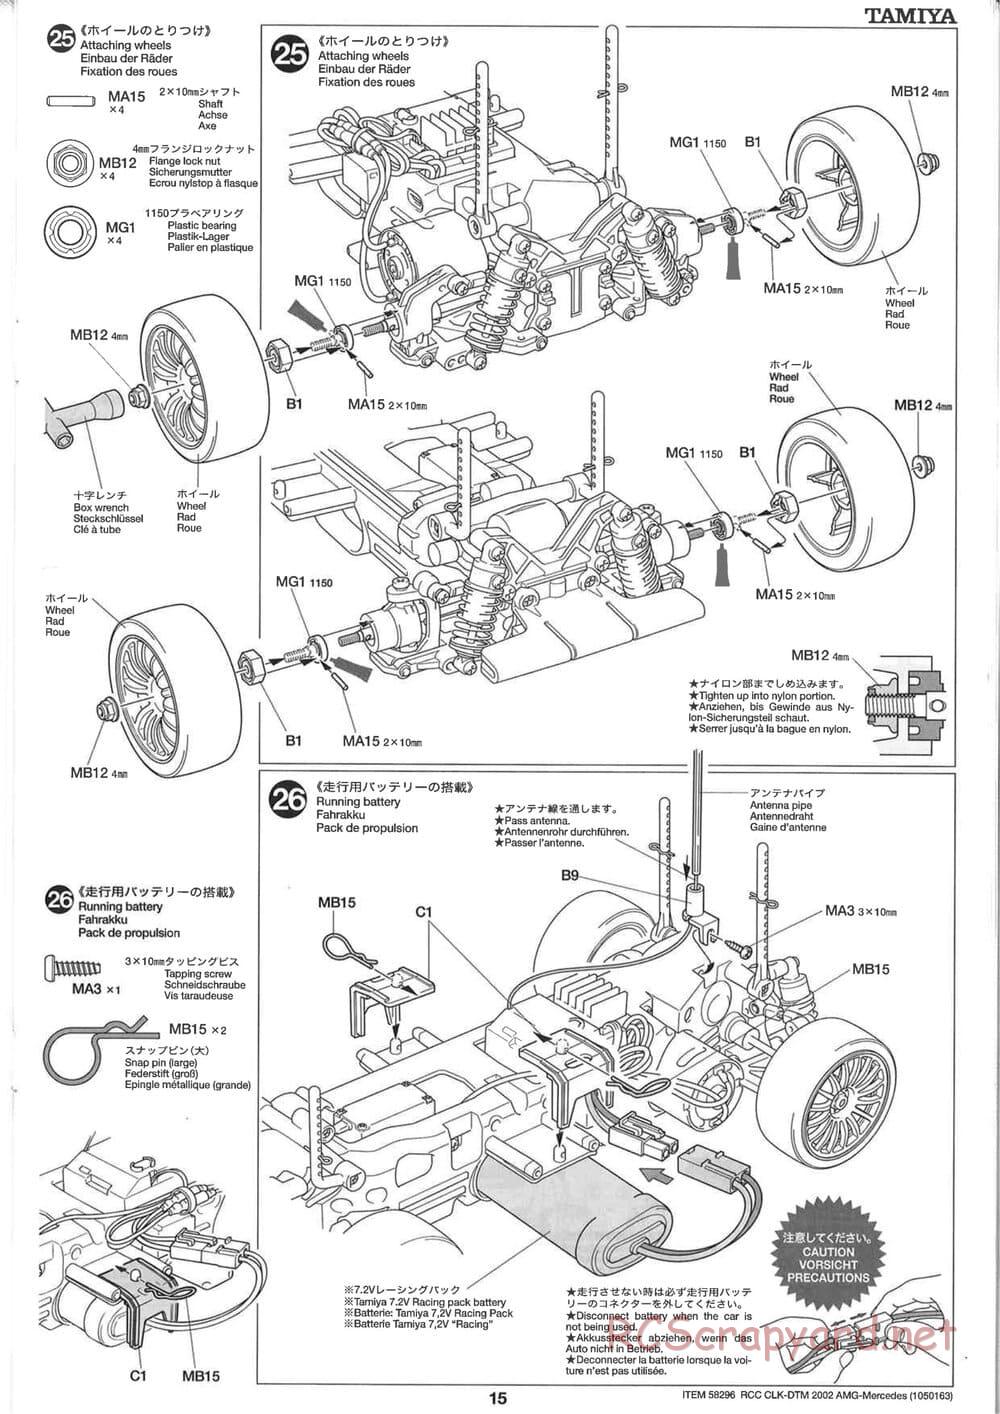 Tamiya - CLK DTM 2002 AMG Mercedes - TL-01 LA Chassis - Manual - Page 15